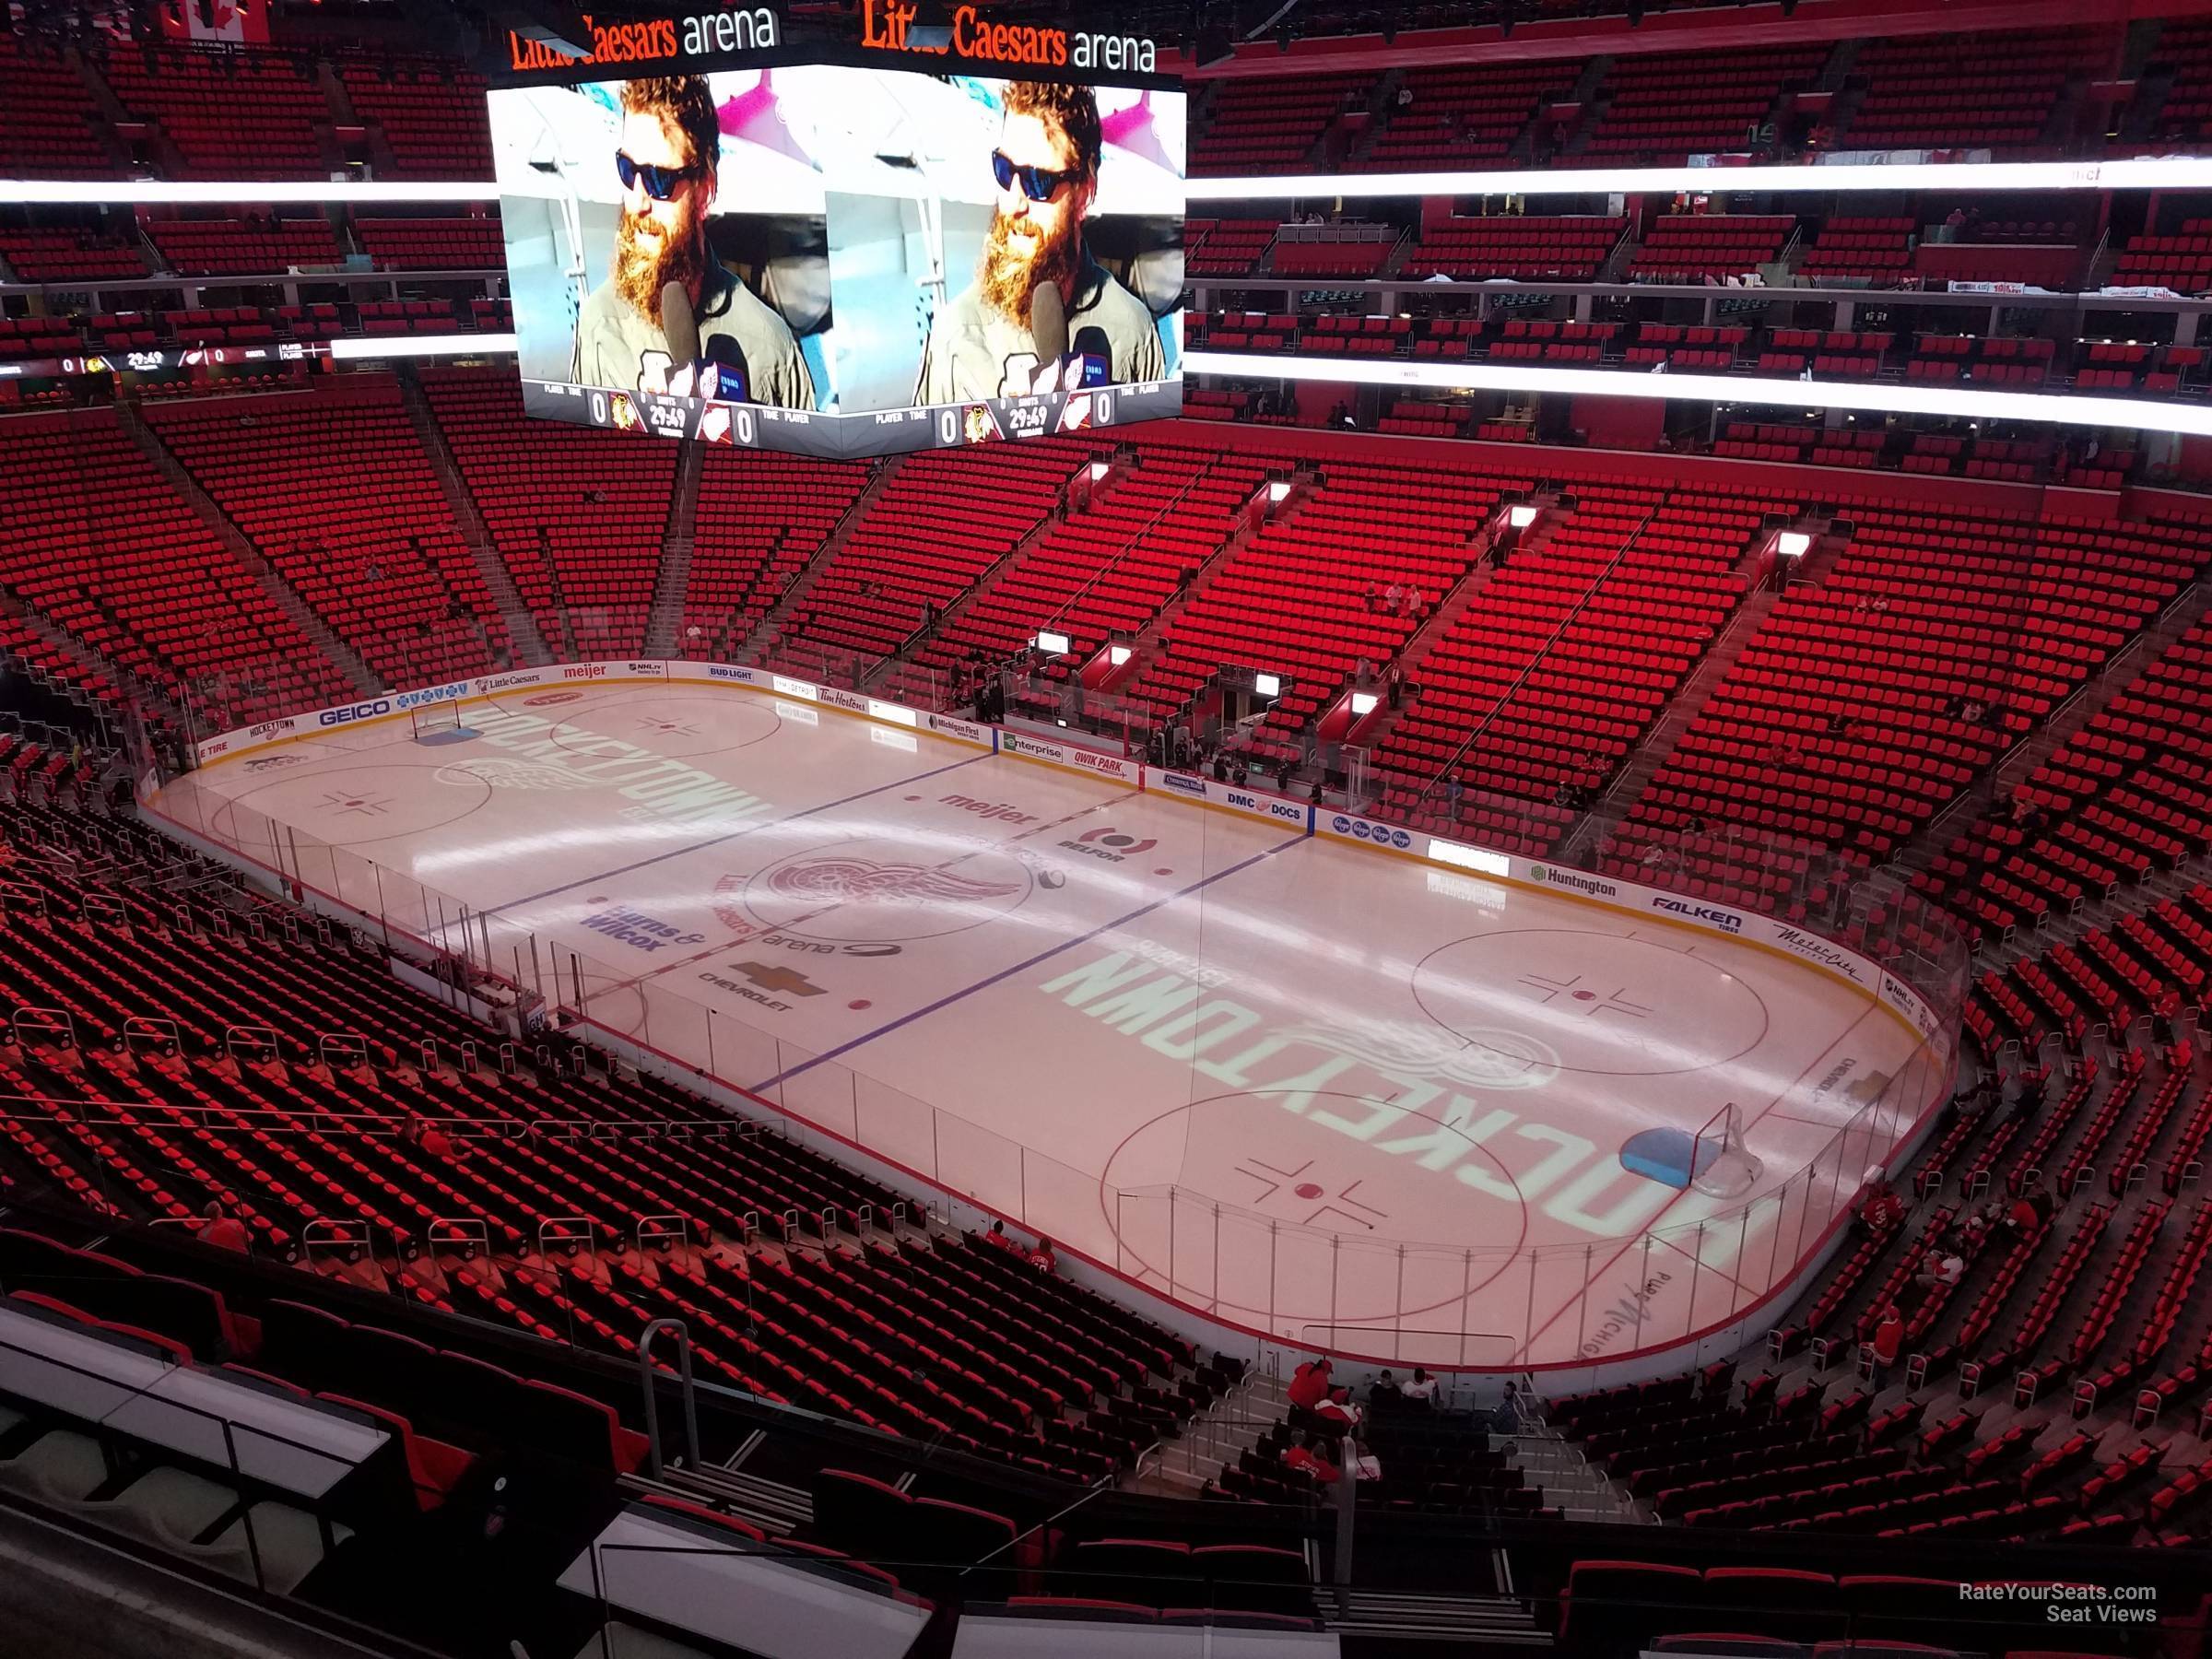 mezzanine 6, row 4 seat view  for hockey - little caesars arena